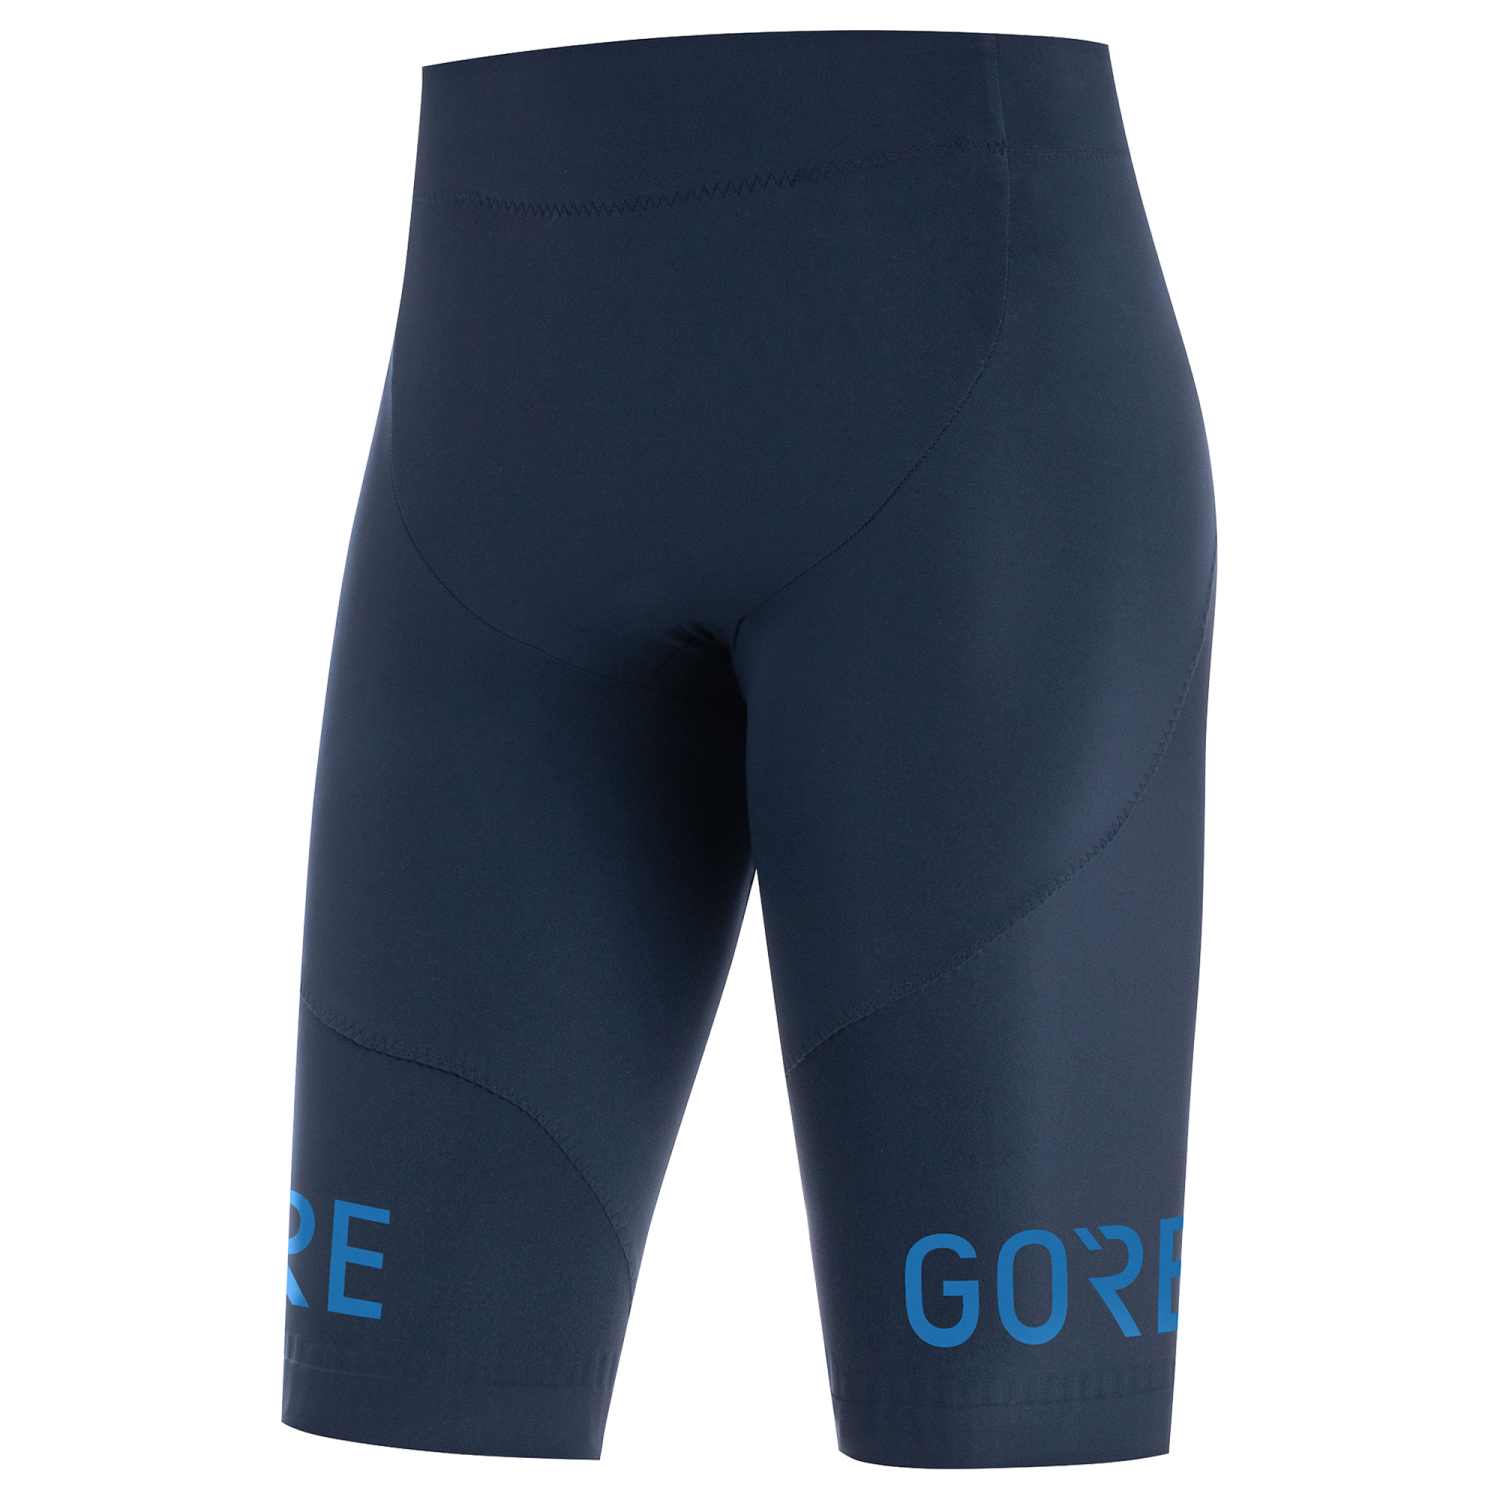 GOREWEAR C7 Women's Long Distance Cycling Short Tights+ in Orbit Blue | Medium (8-10) | Form fit | Windproof